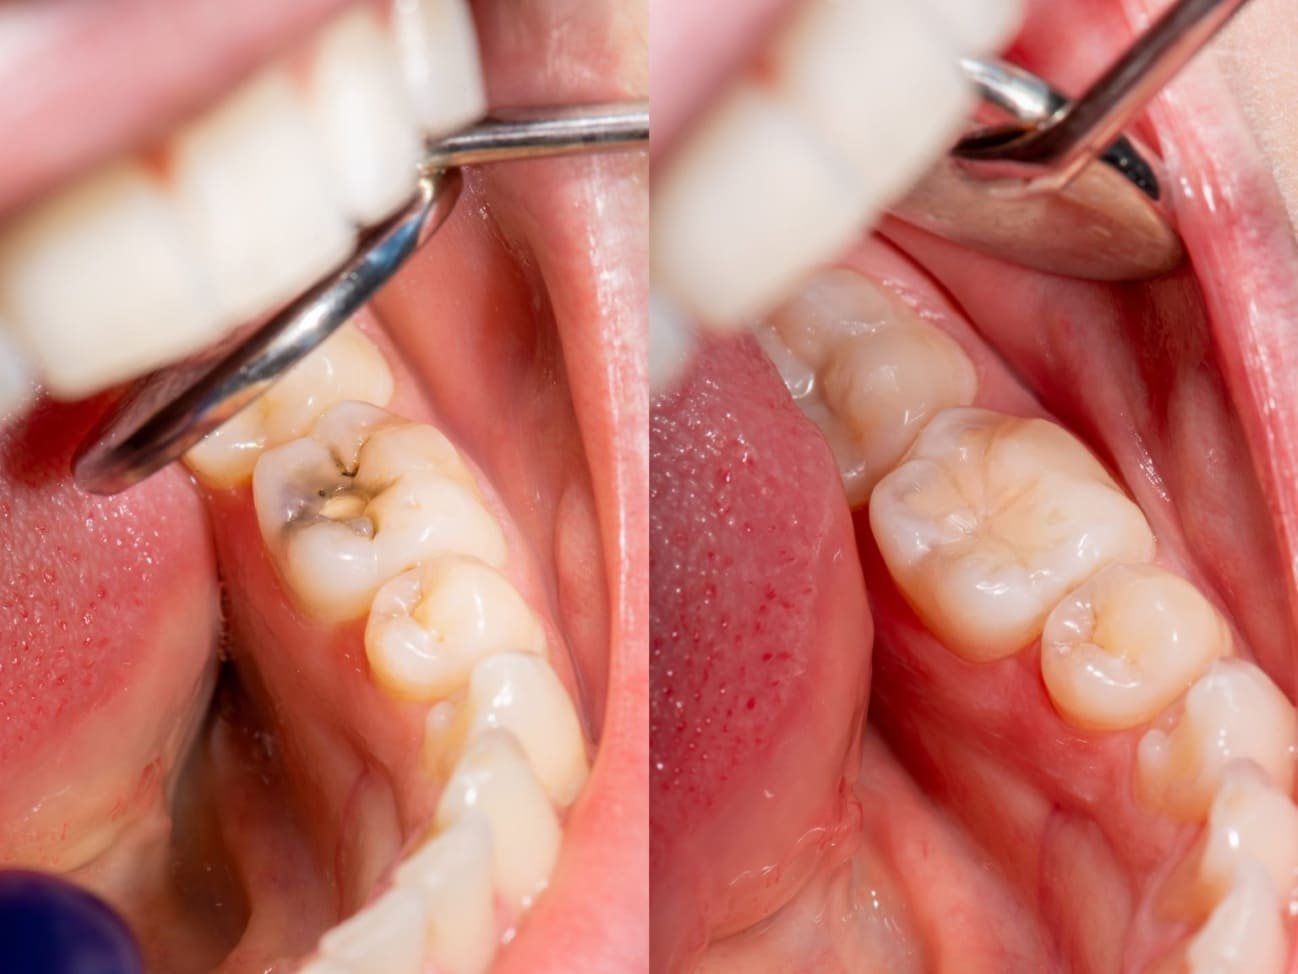 Dental Fillings Image